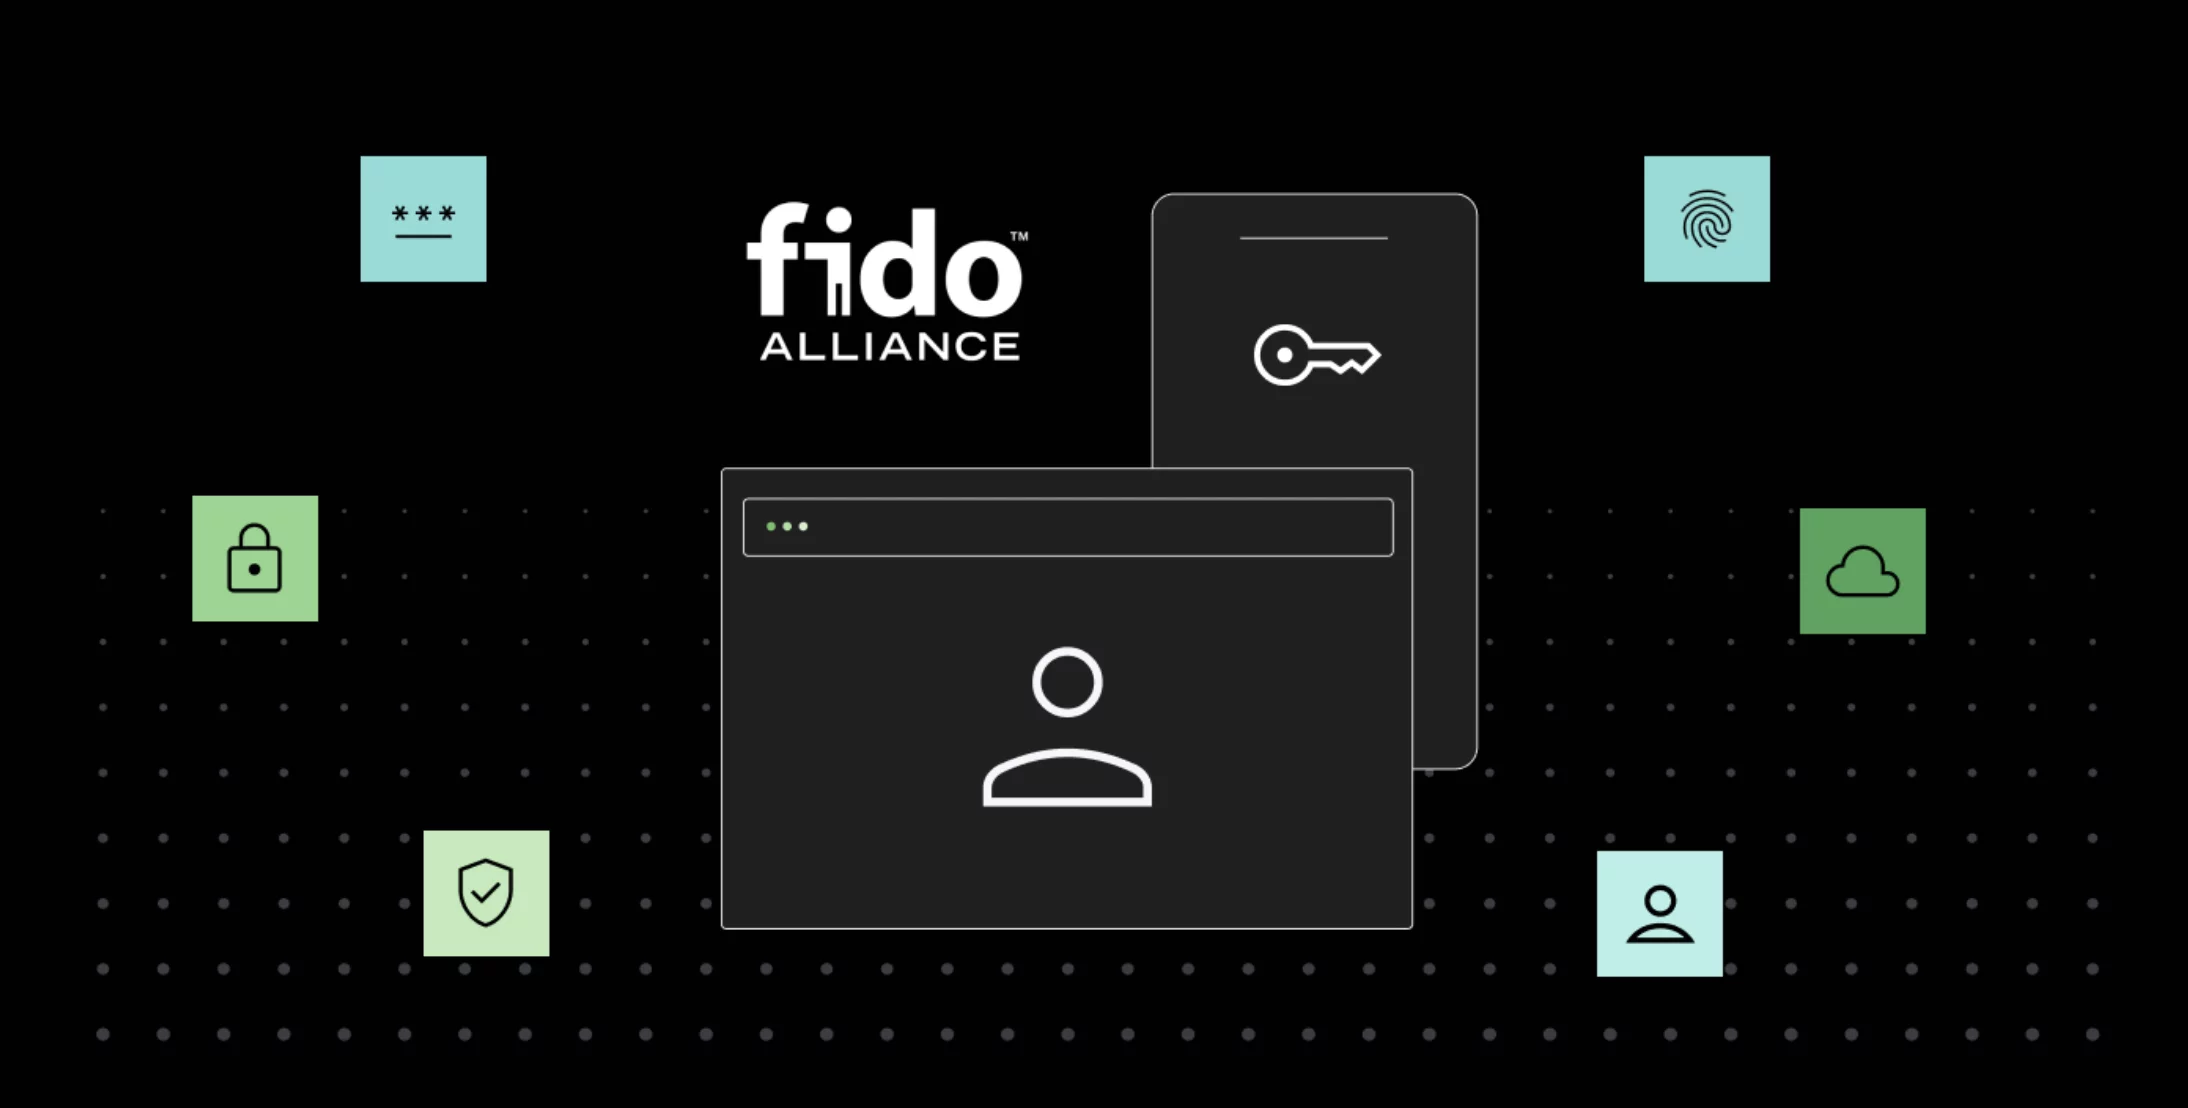 Certified Authenticator Levels - FIDO Alliance